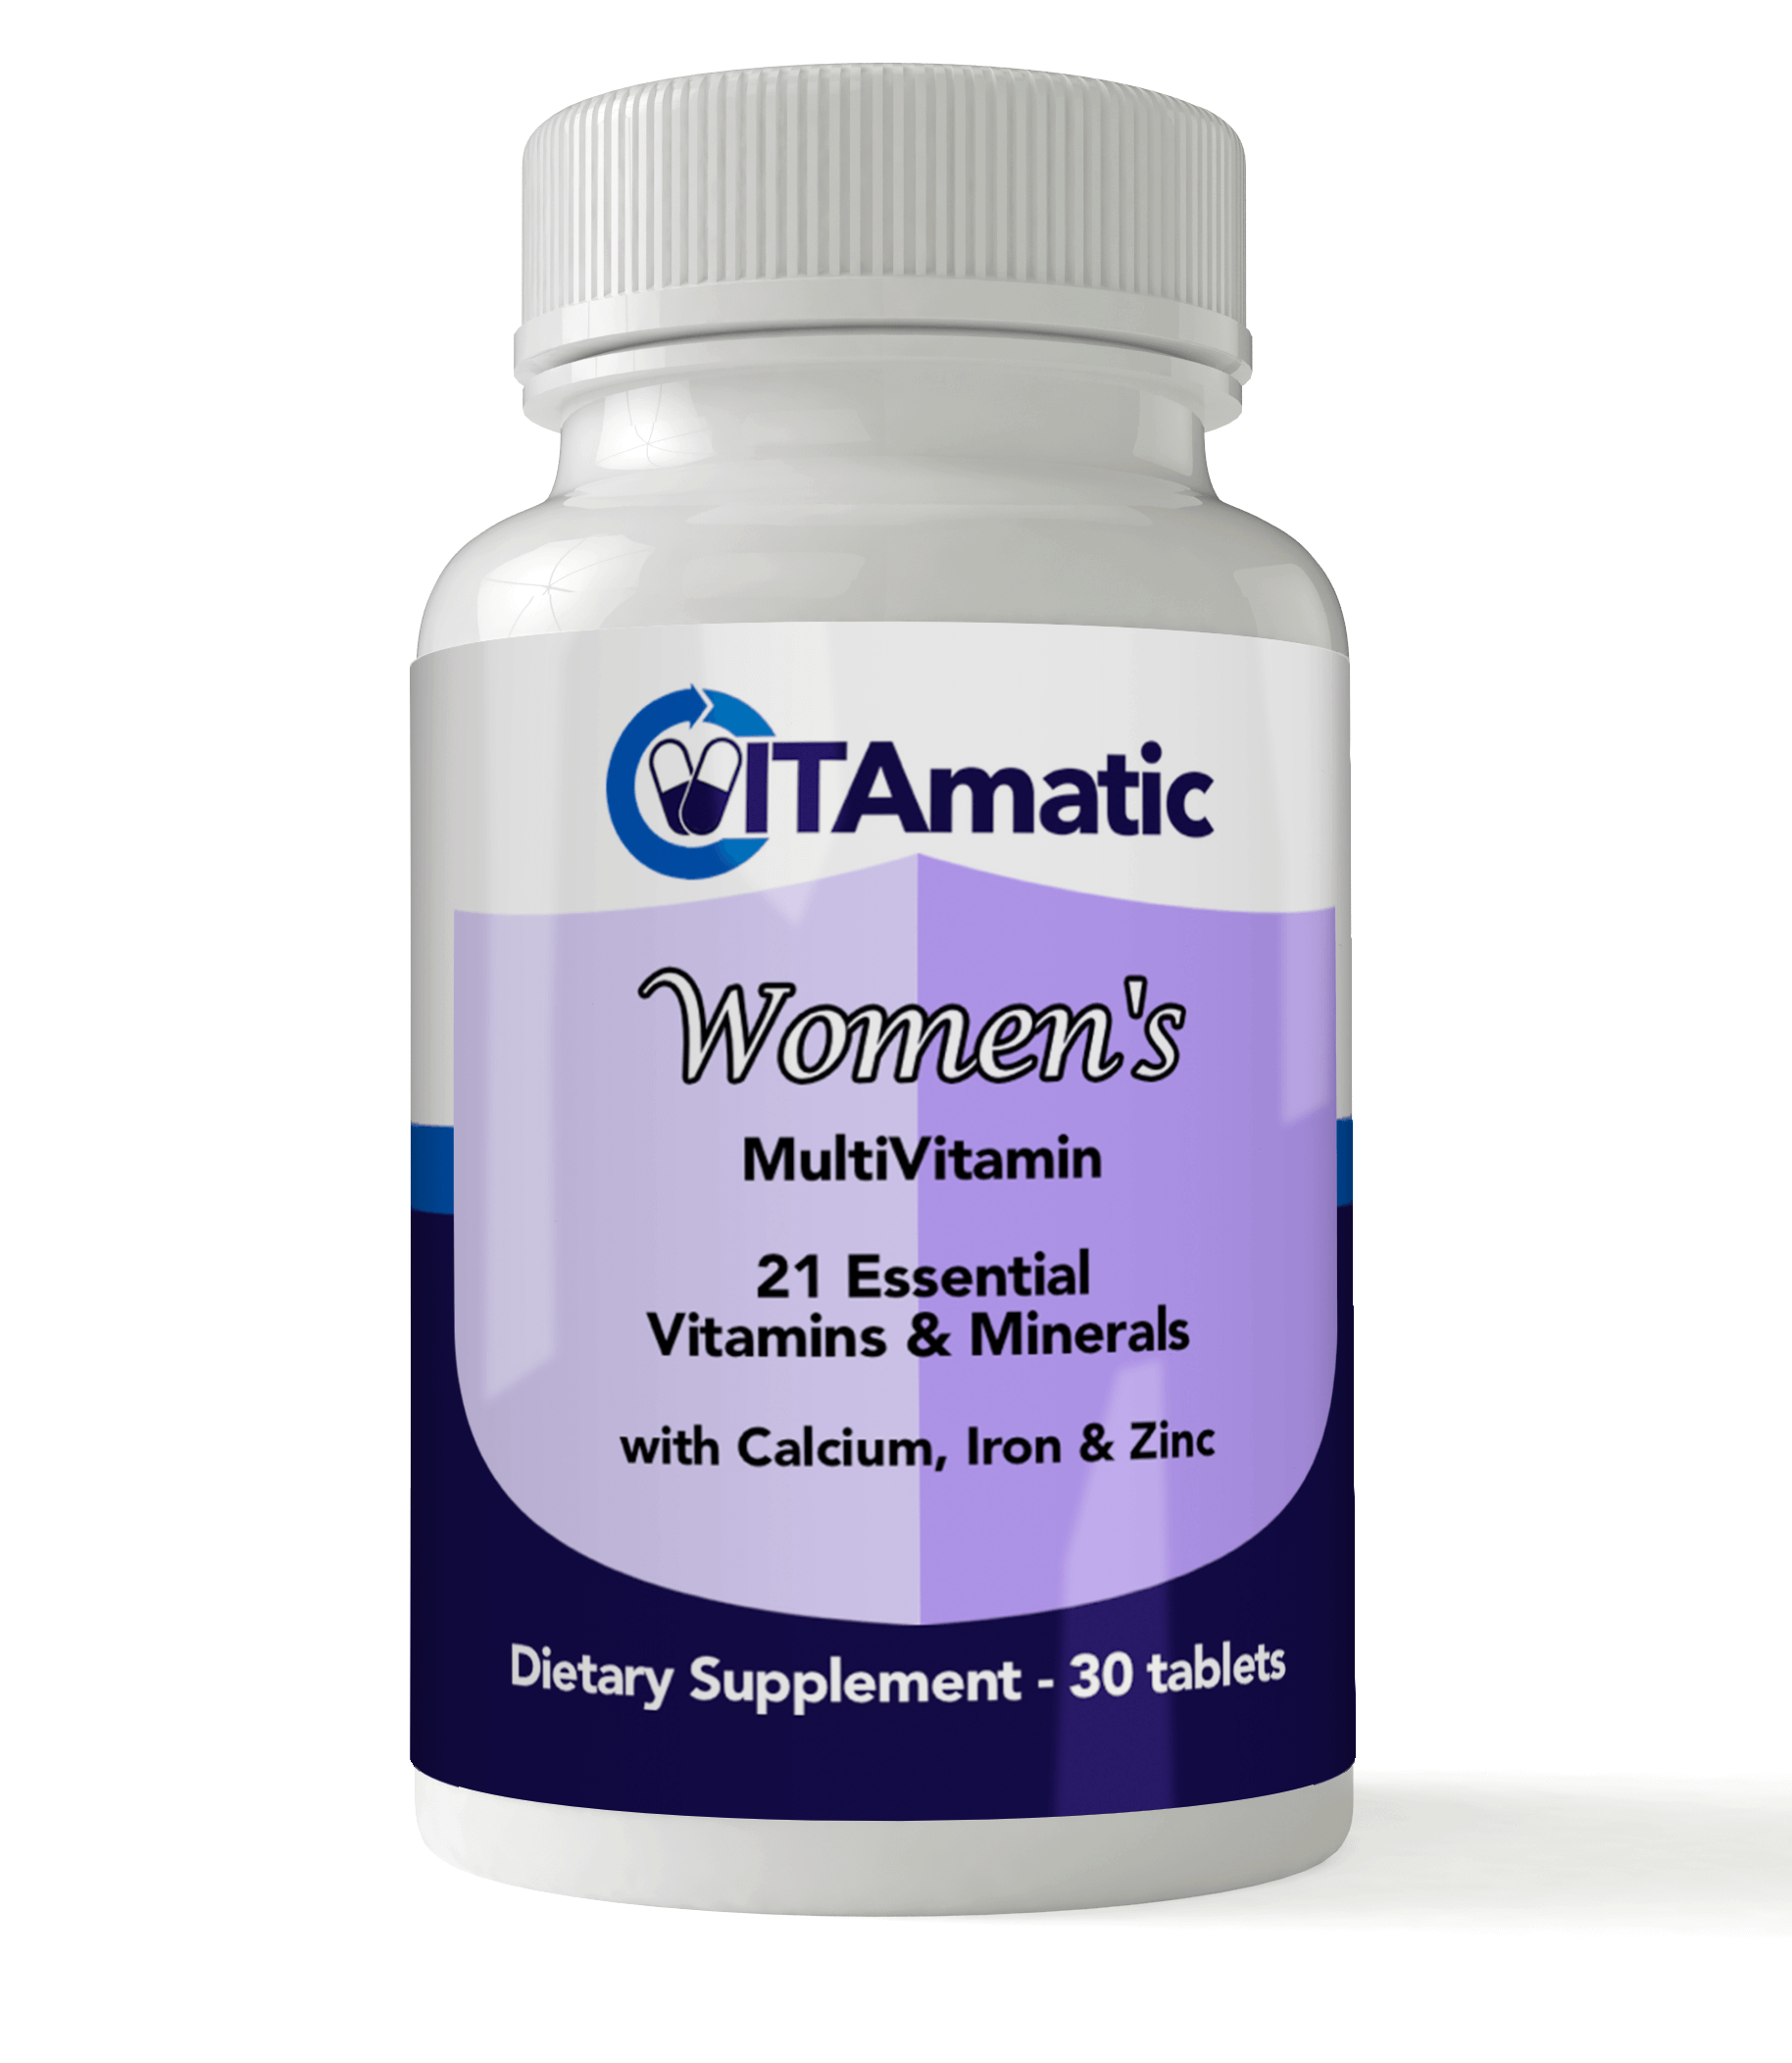 Vitamatic Womens Multivitamin